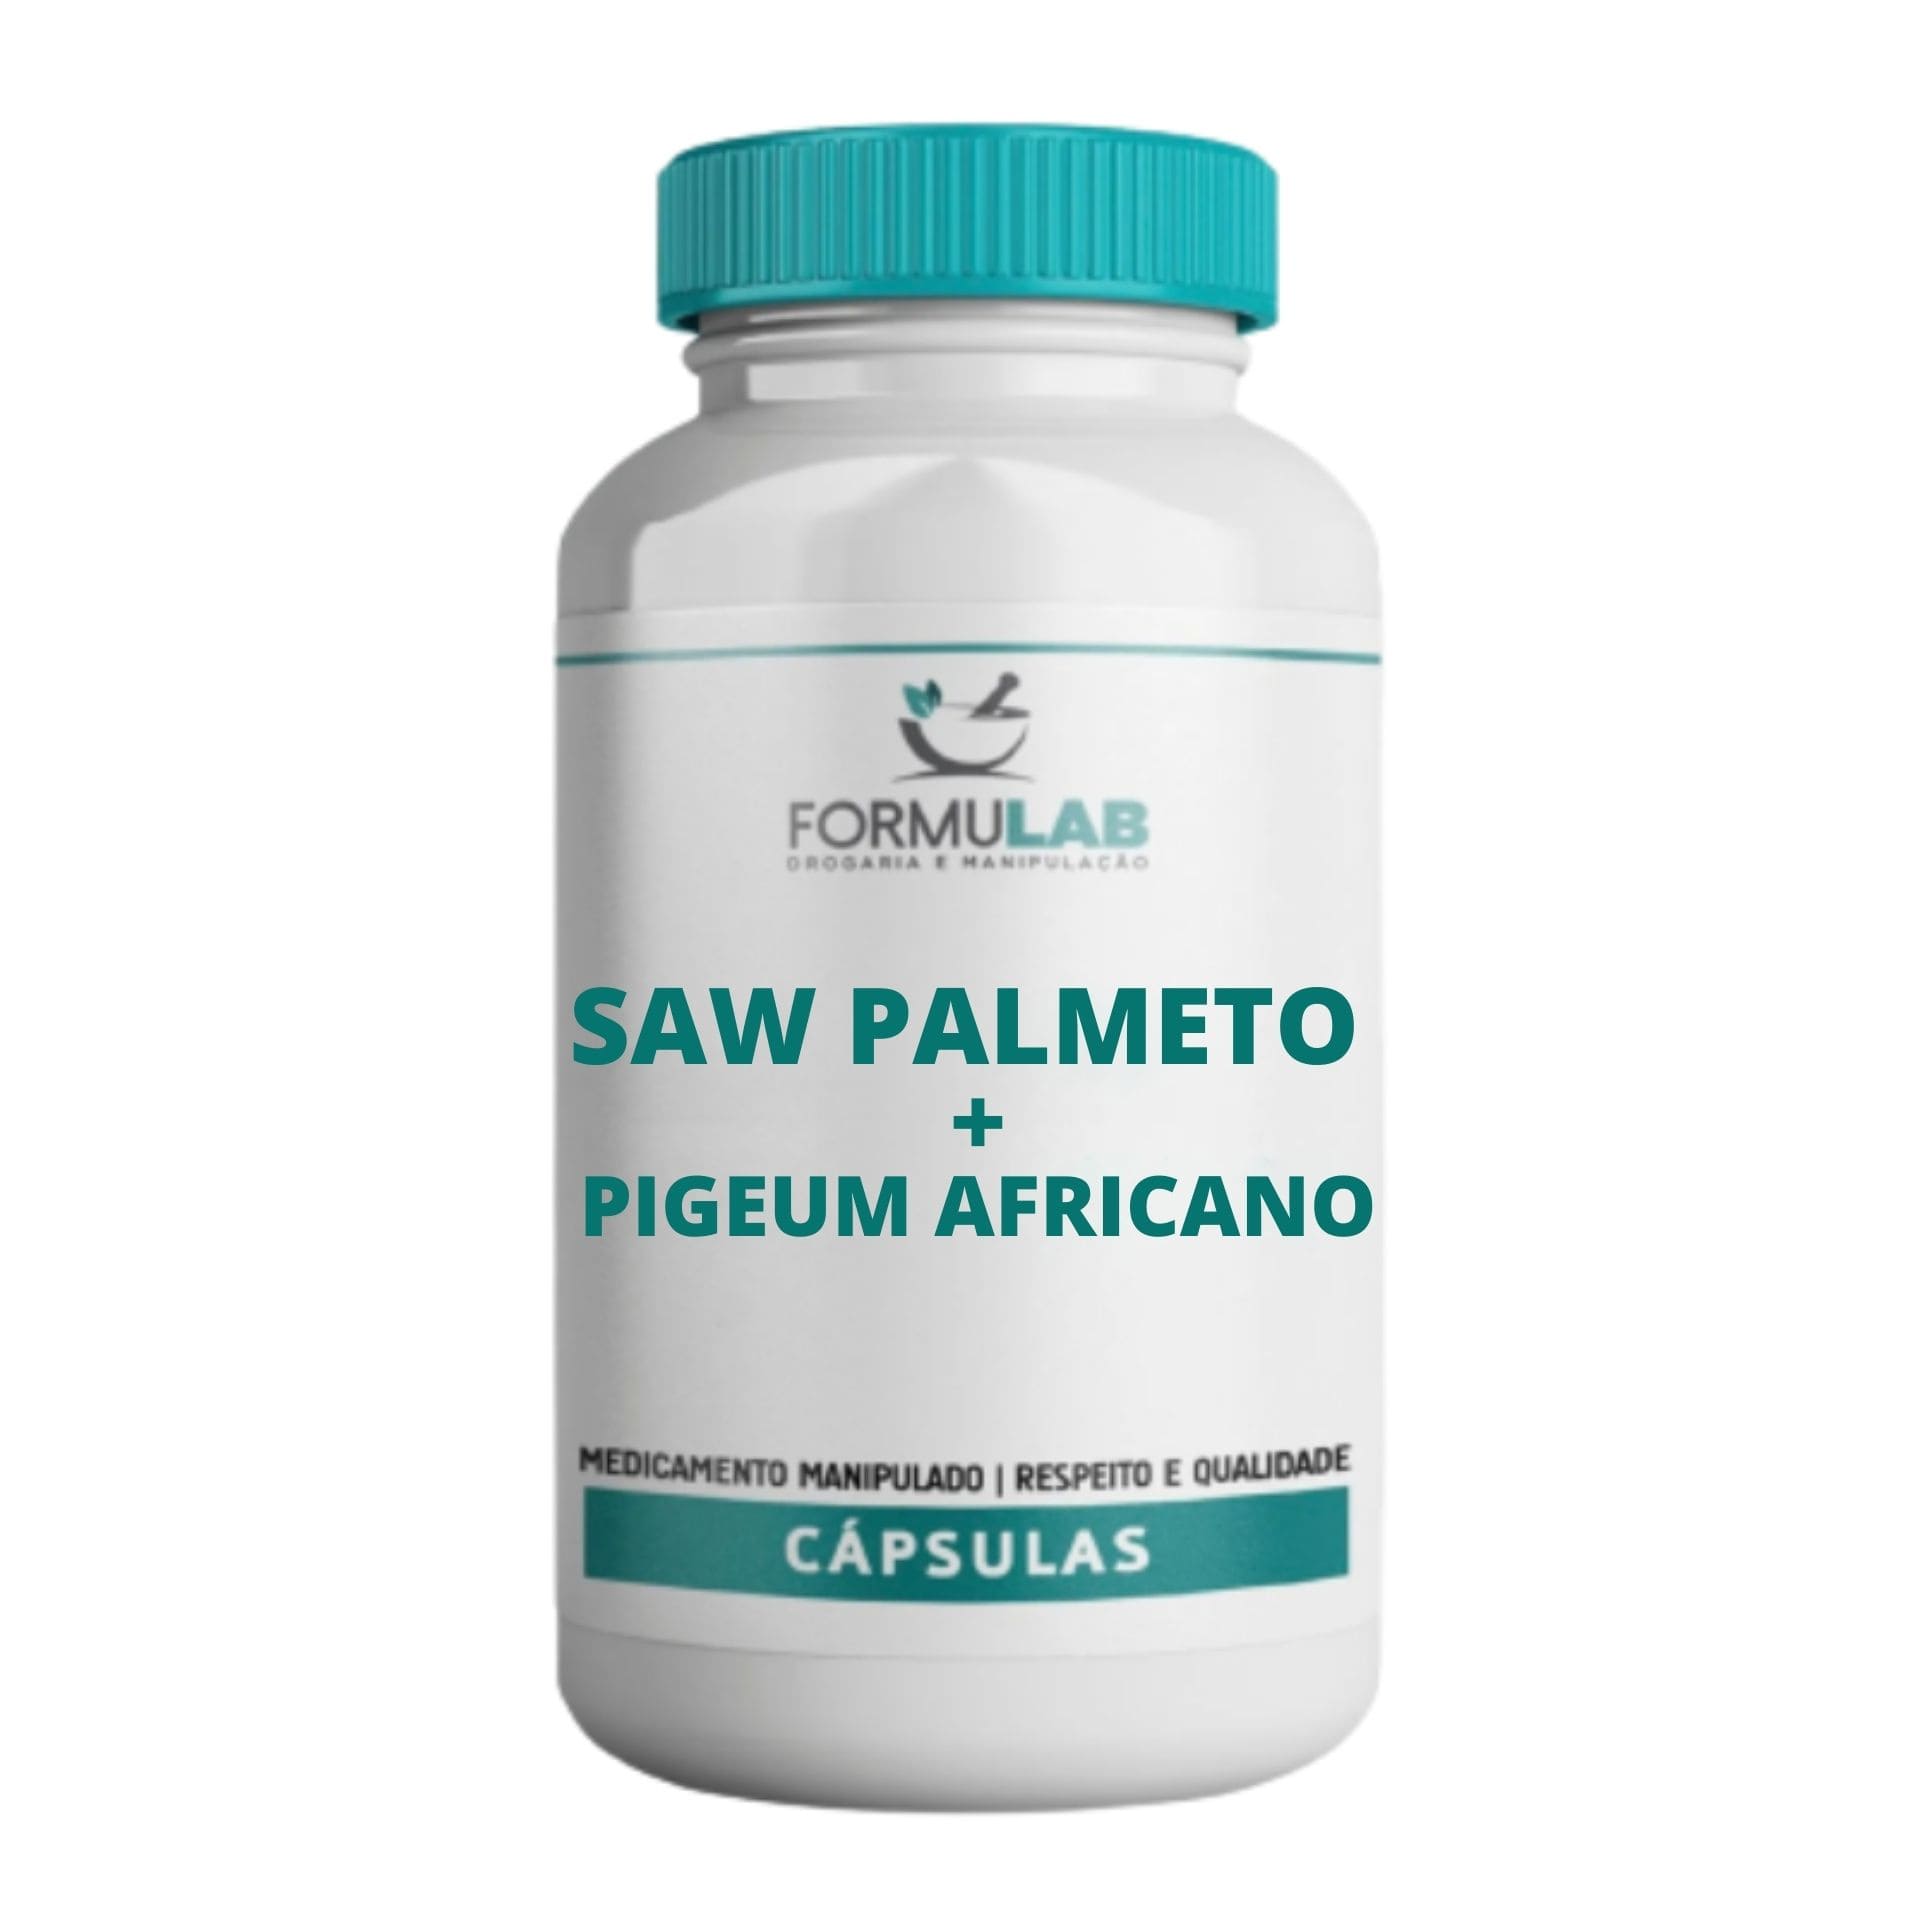 Saw Palmeto 160mg - Serenoa Repens + Pigeum Africano 100mg